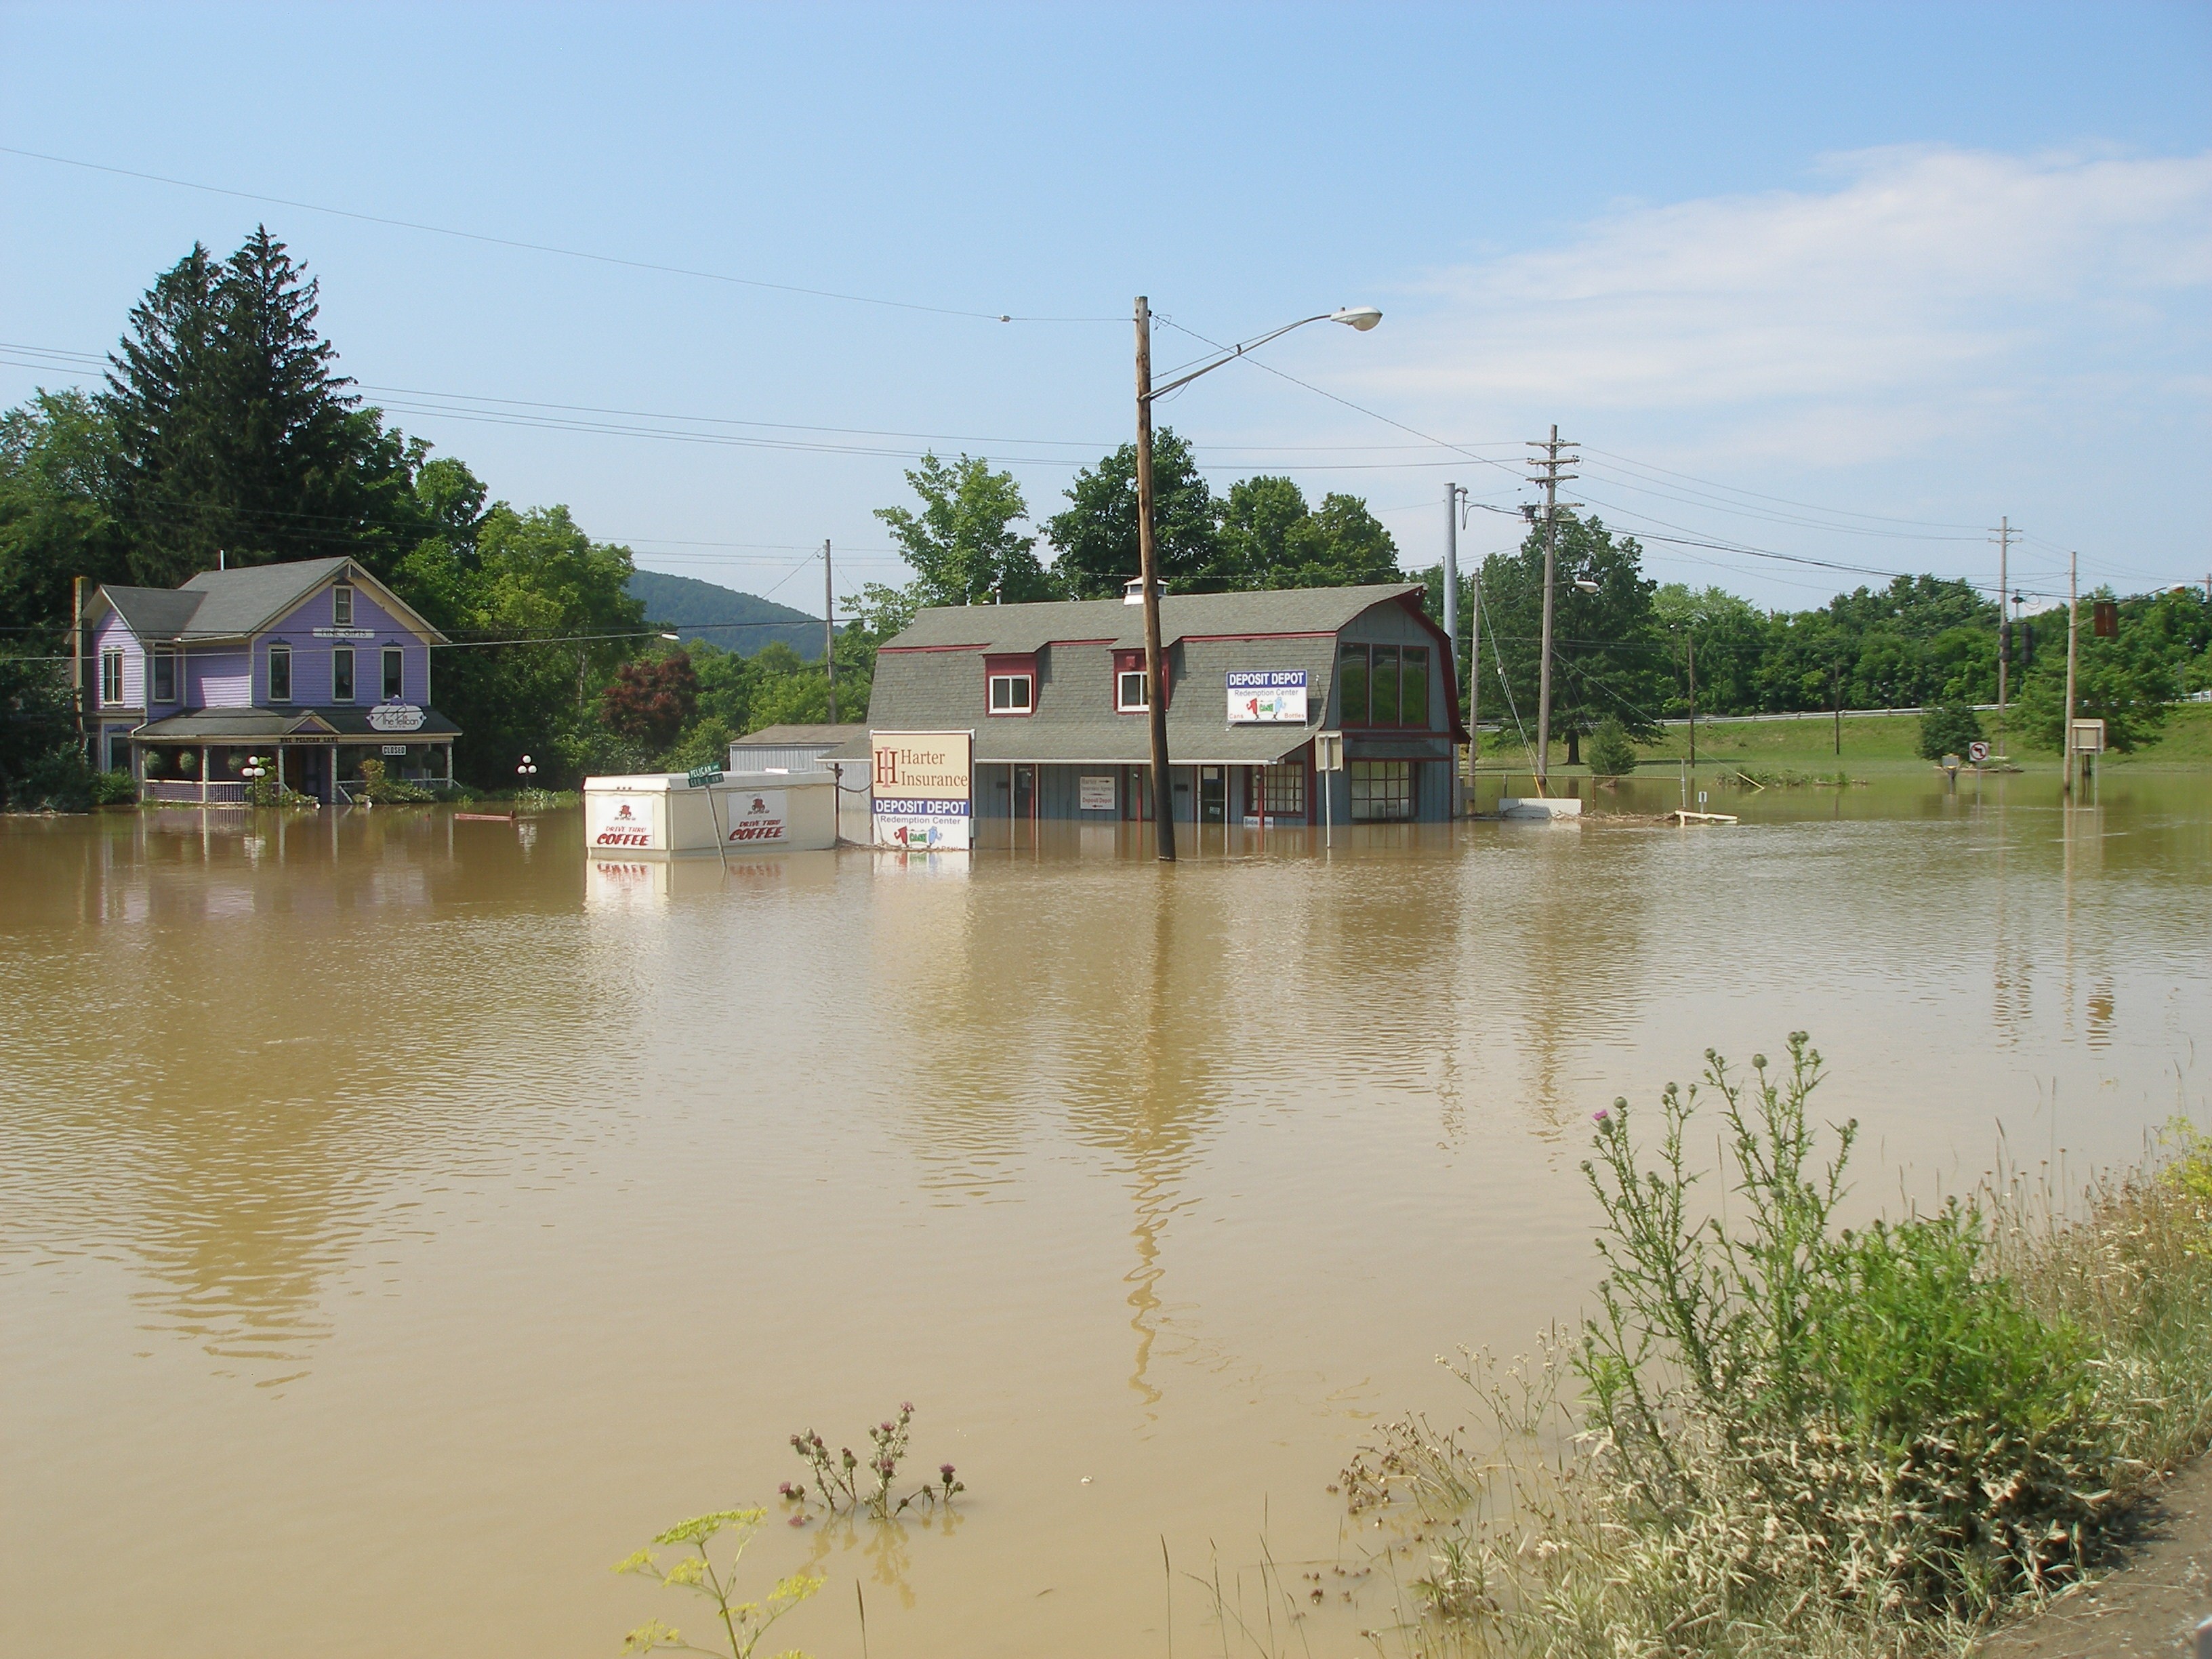 06-29-06  Reponse - Flooding